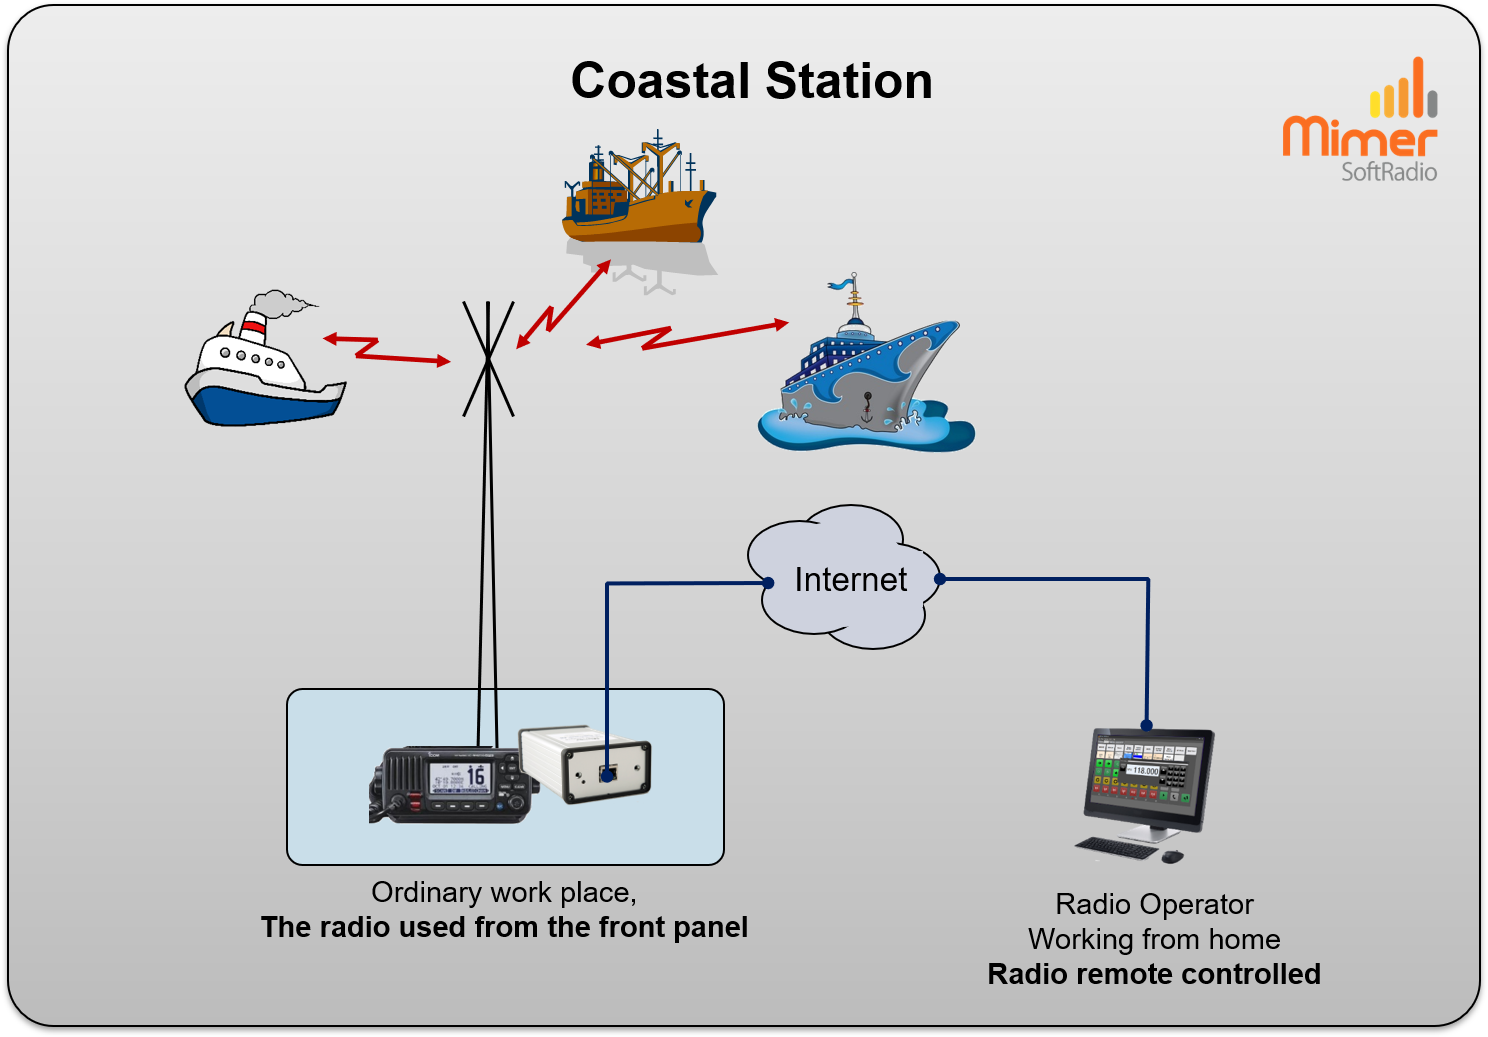 Coastal station remote controlled